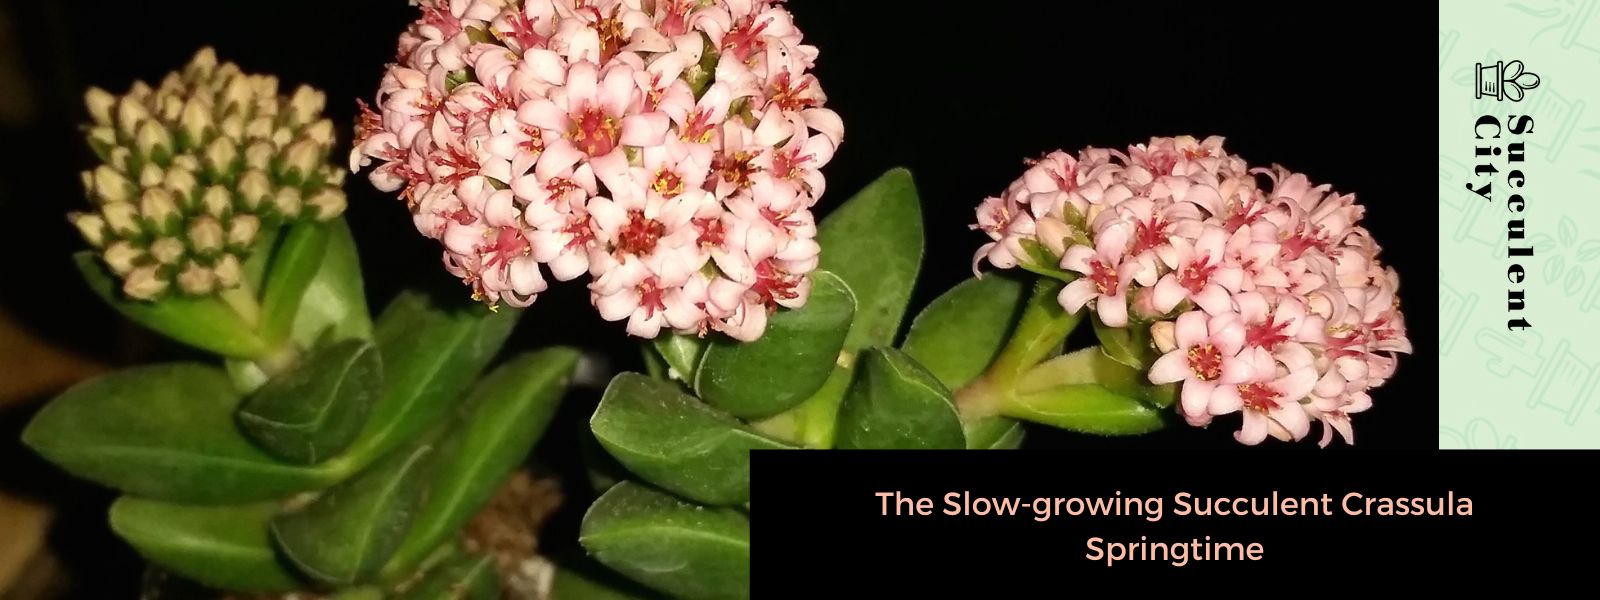 La suculenta de lento crecimiento “Crassula Springtime”